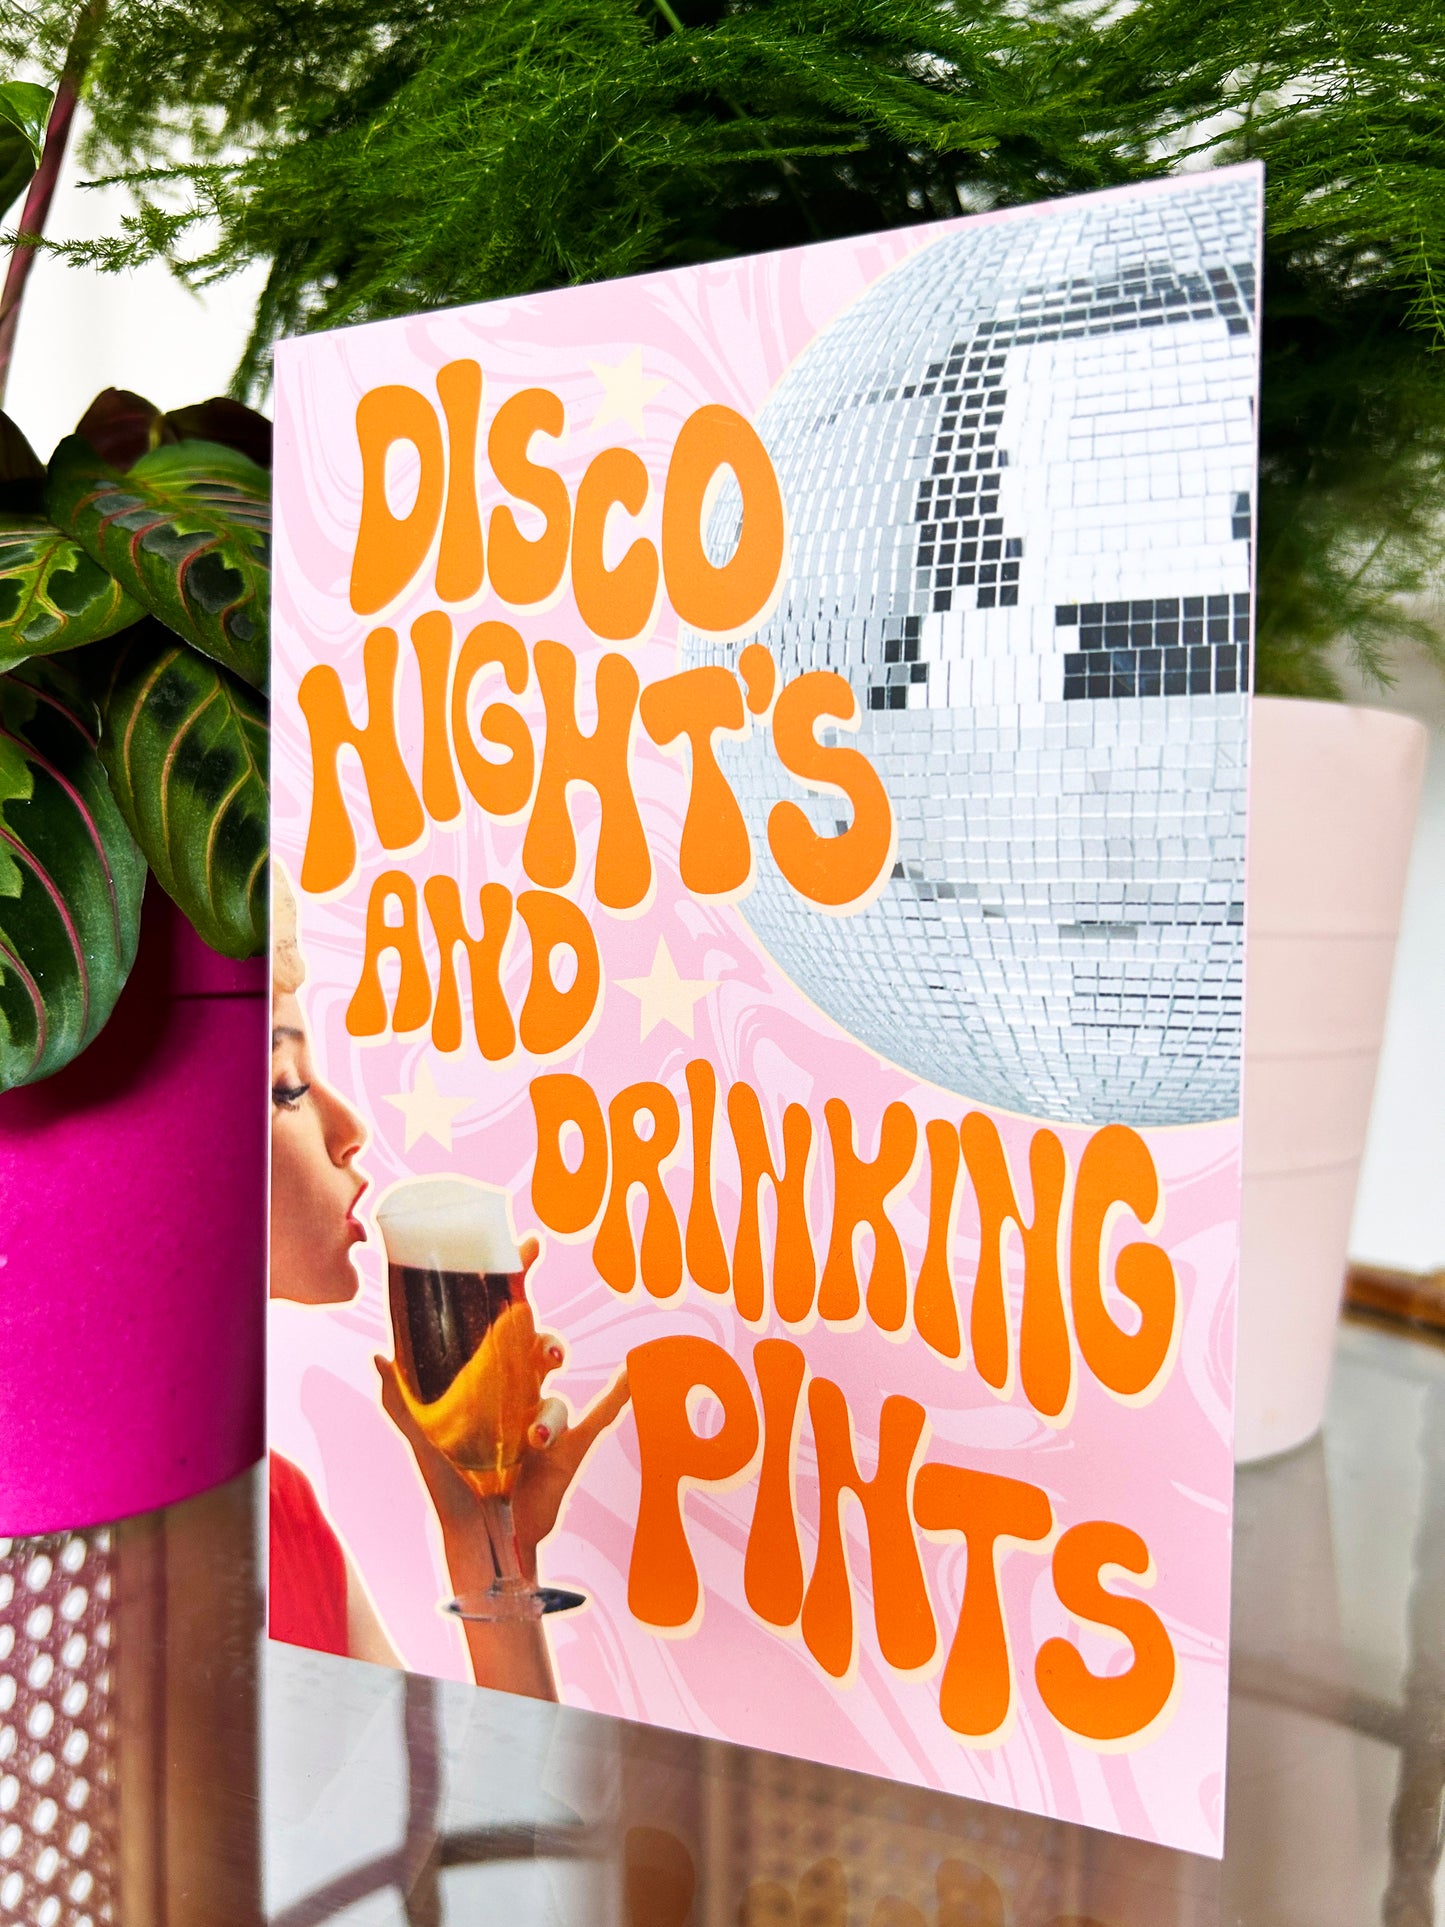 Disco Nights & Drinking Pints Greeting Card